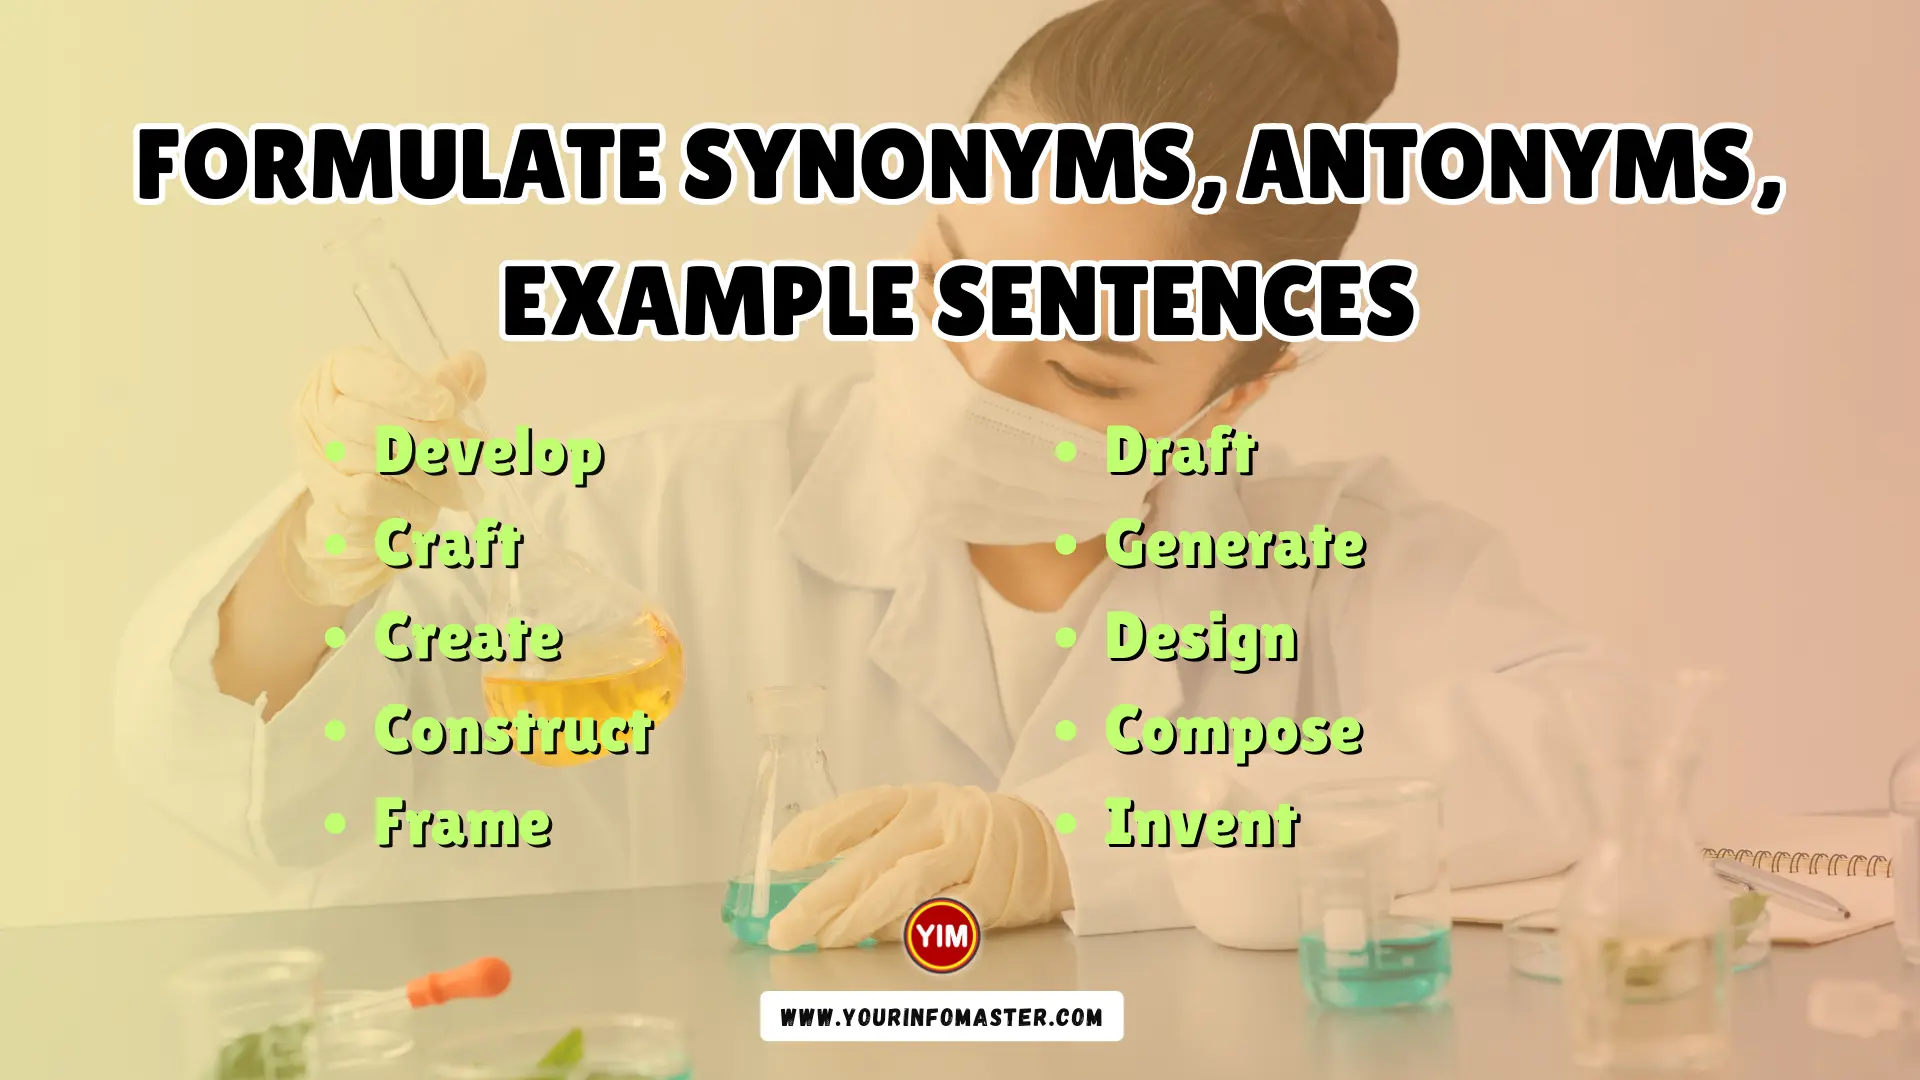 Formulate Synonyms, Antonyms, Example Sentences